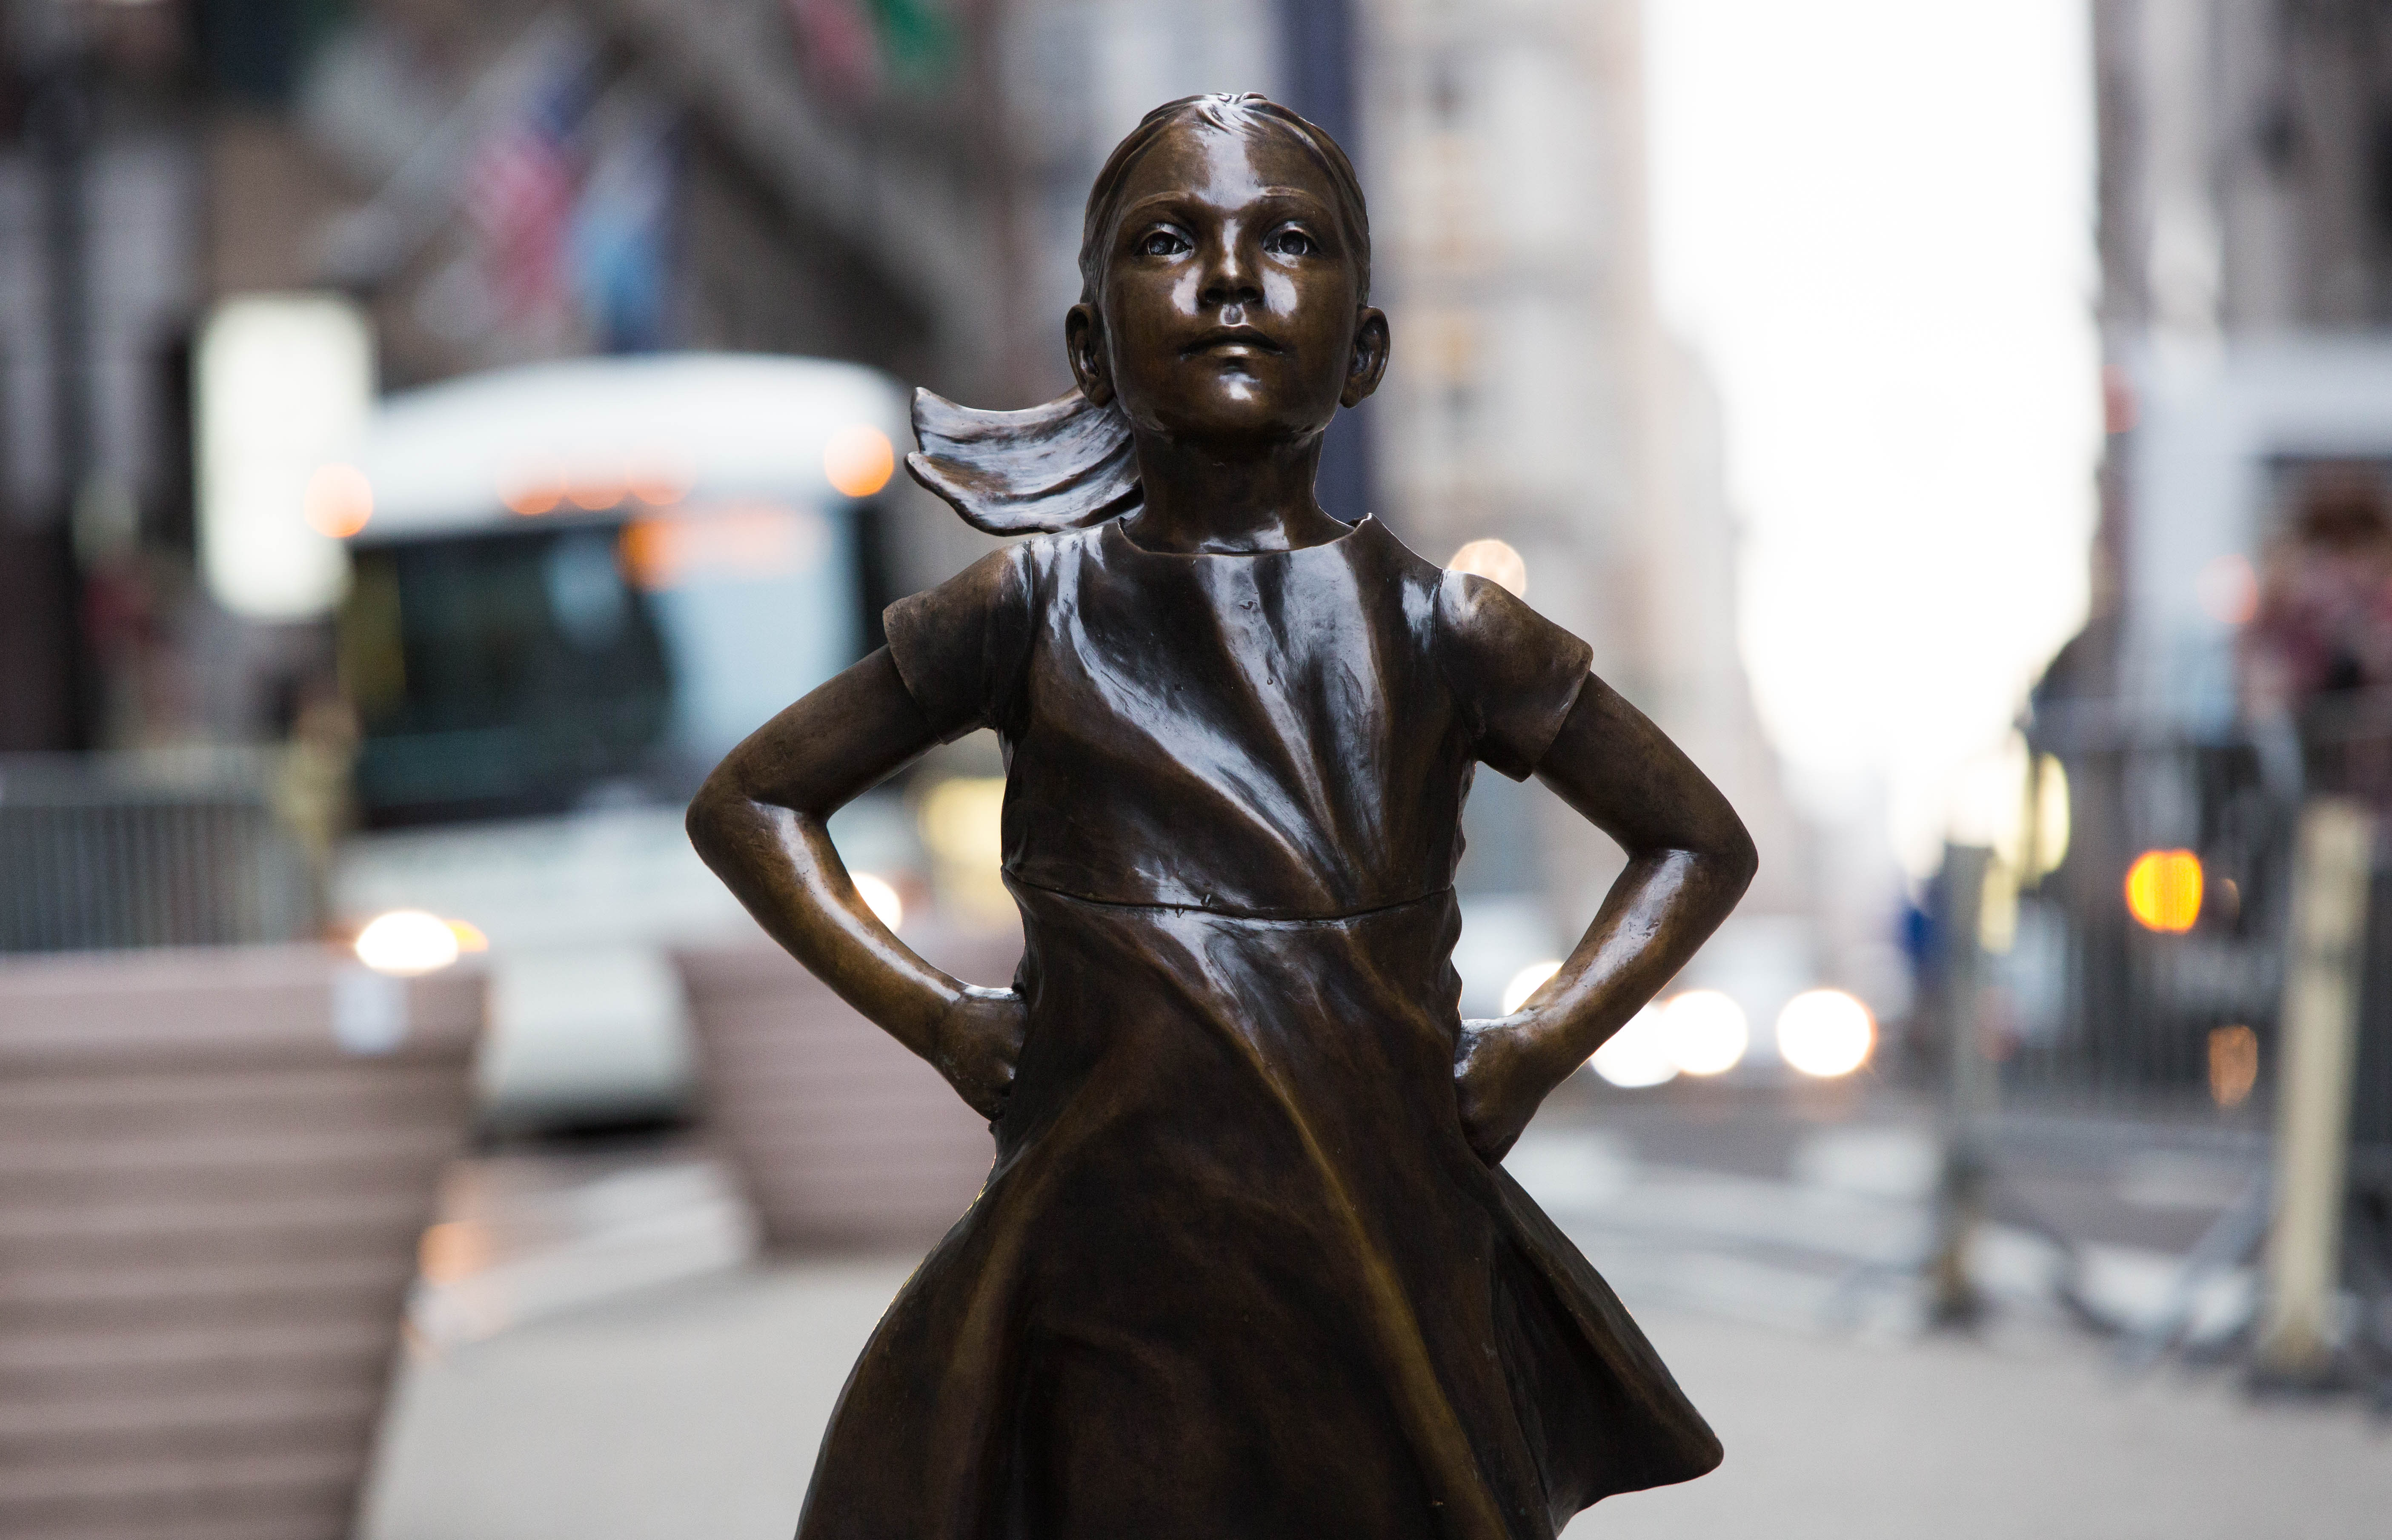 fearless girl, new york, miscellanea, miscellaneous, sculpture, bronze